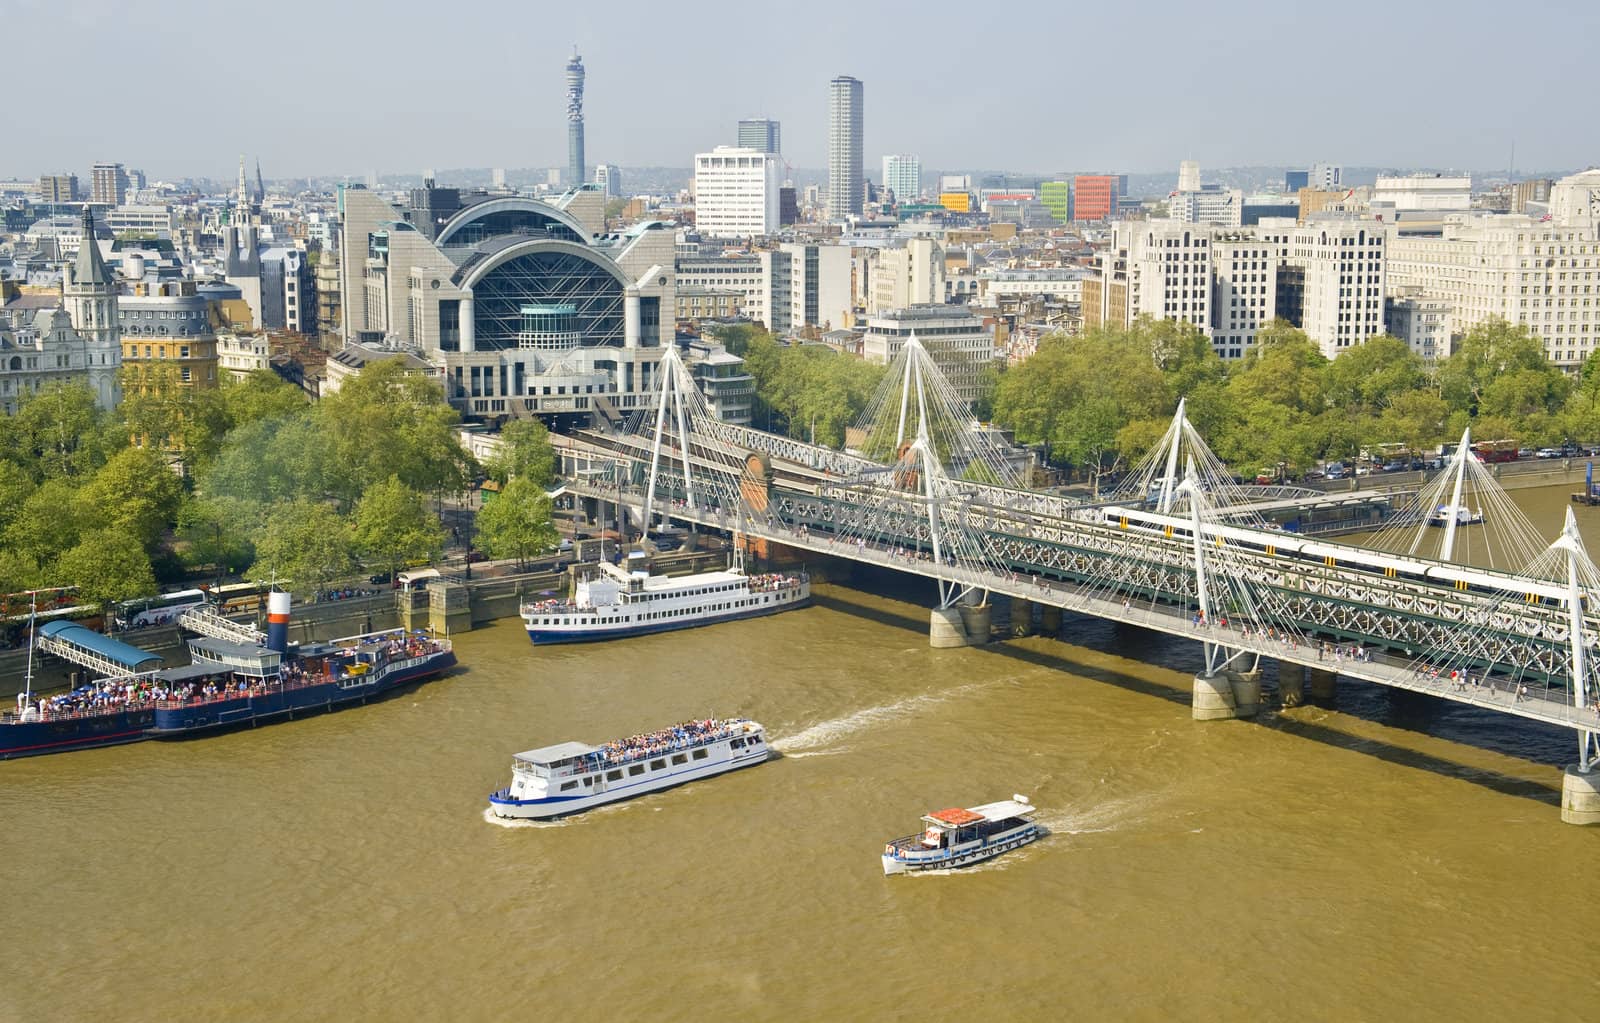 London foot bridge by Alenmax